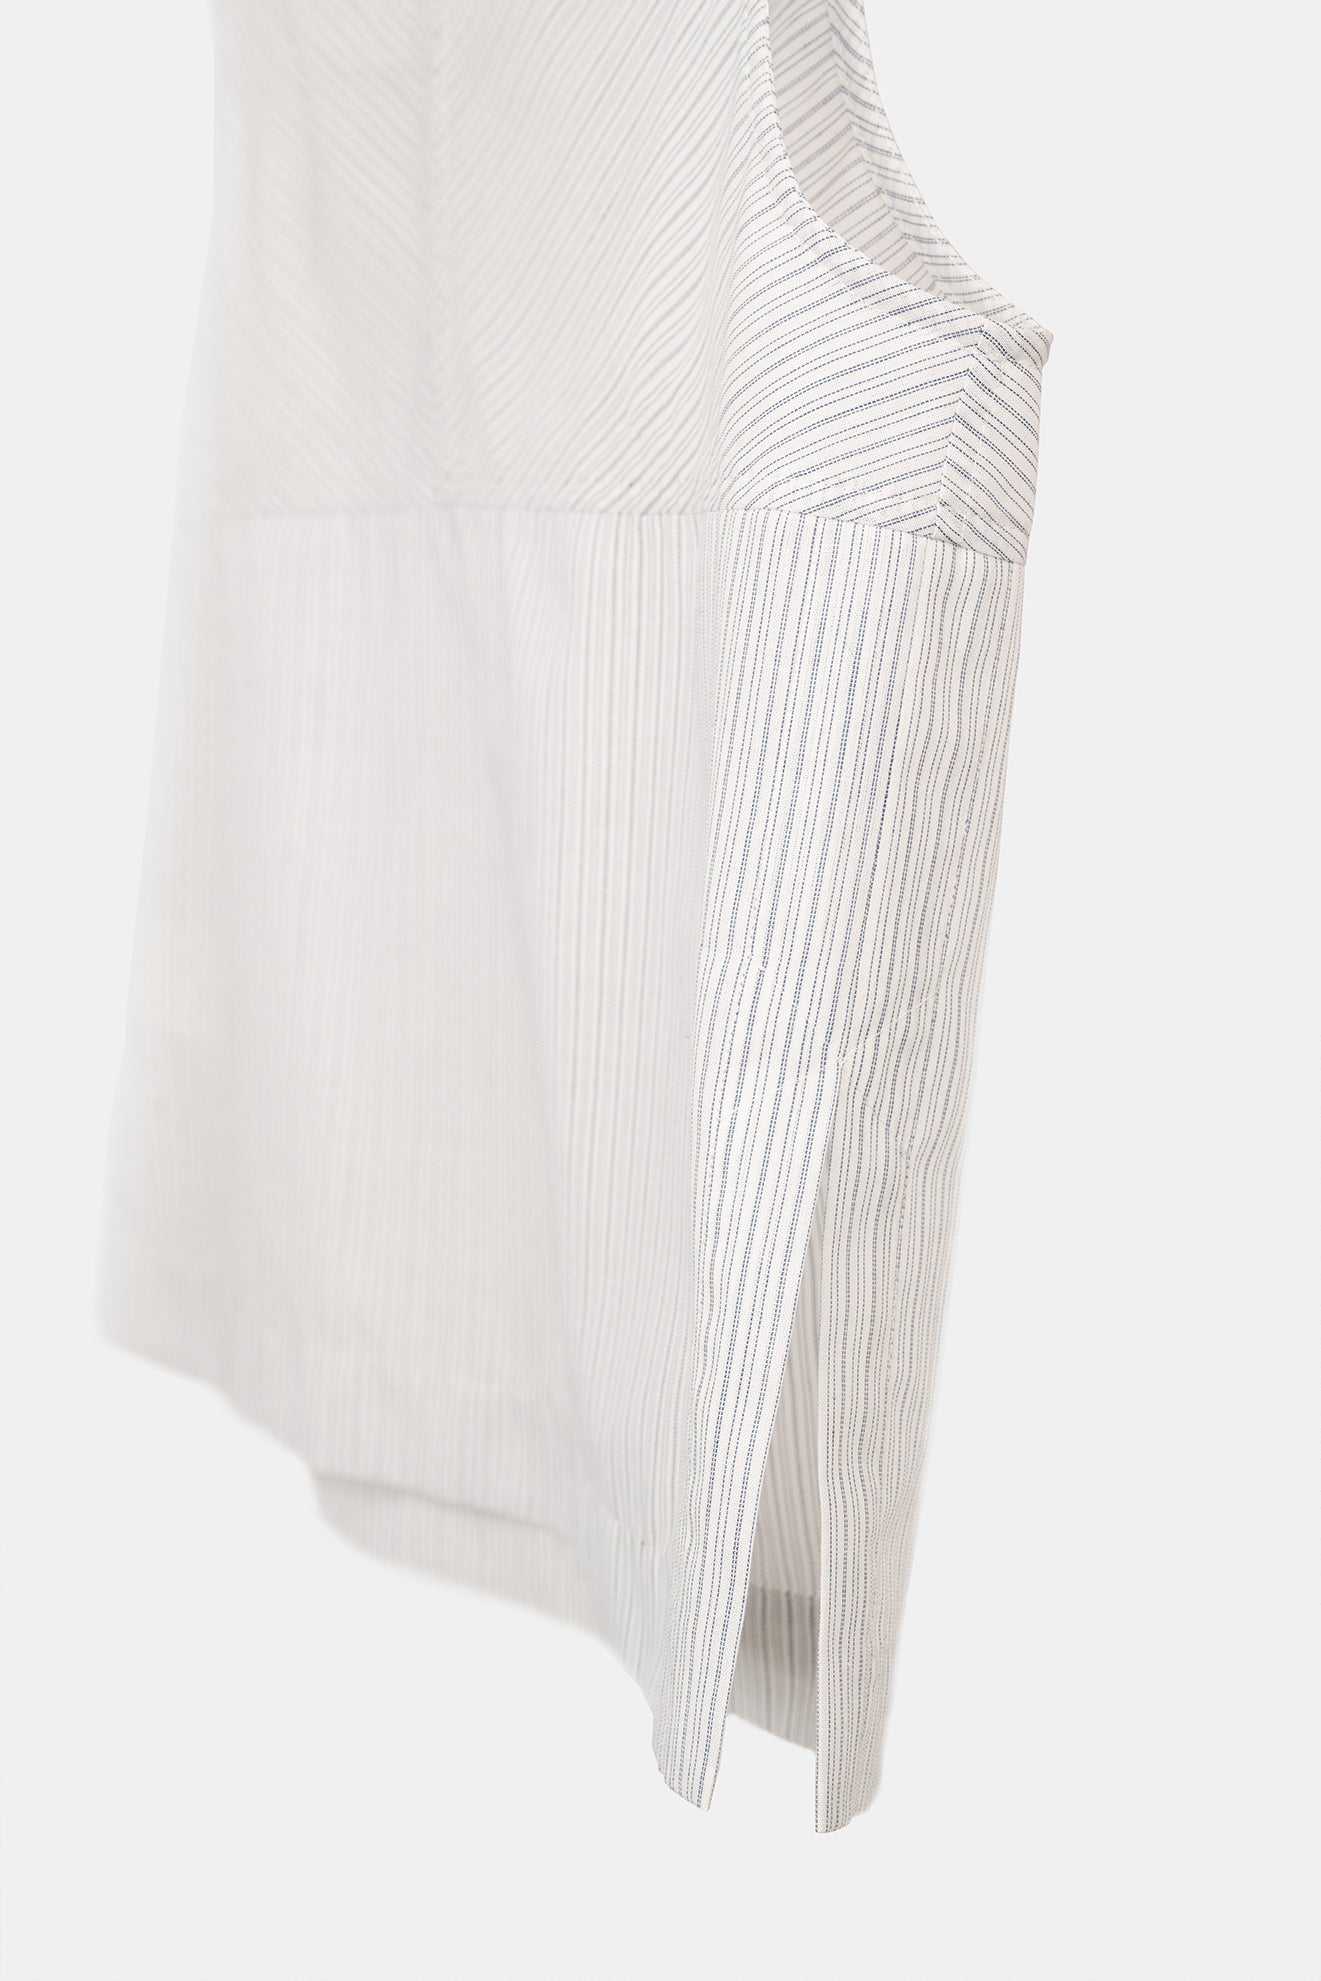 SEANNUNG - WOMEN - Striped Pattern Sleeve-Less Top 條紋無袖上衣